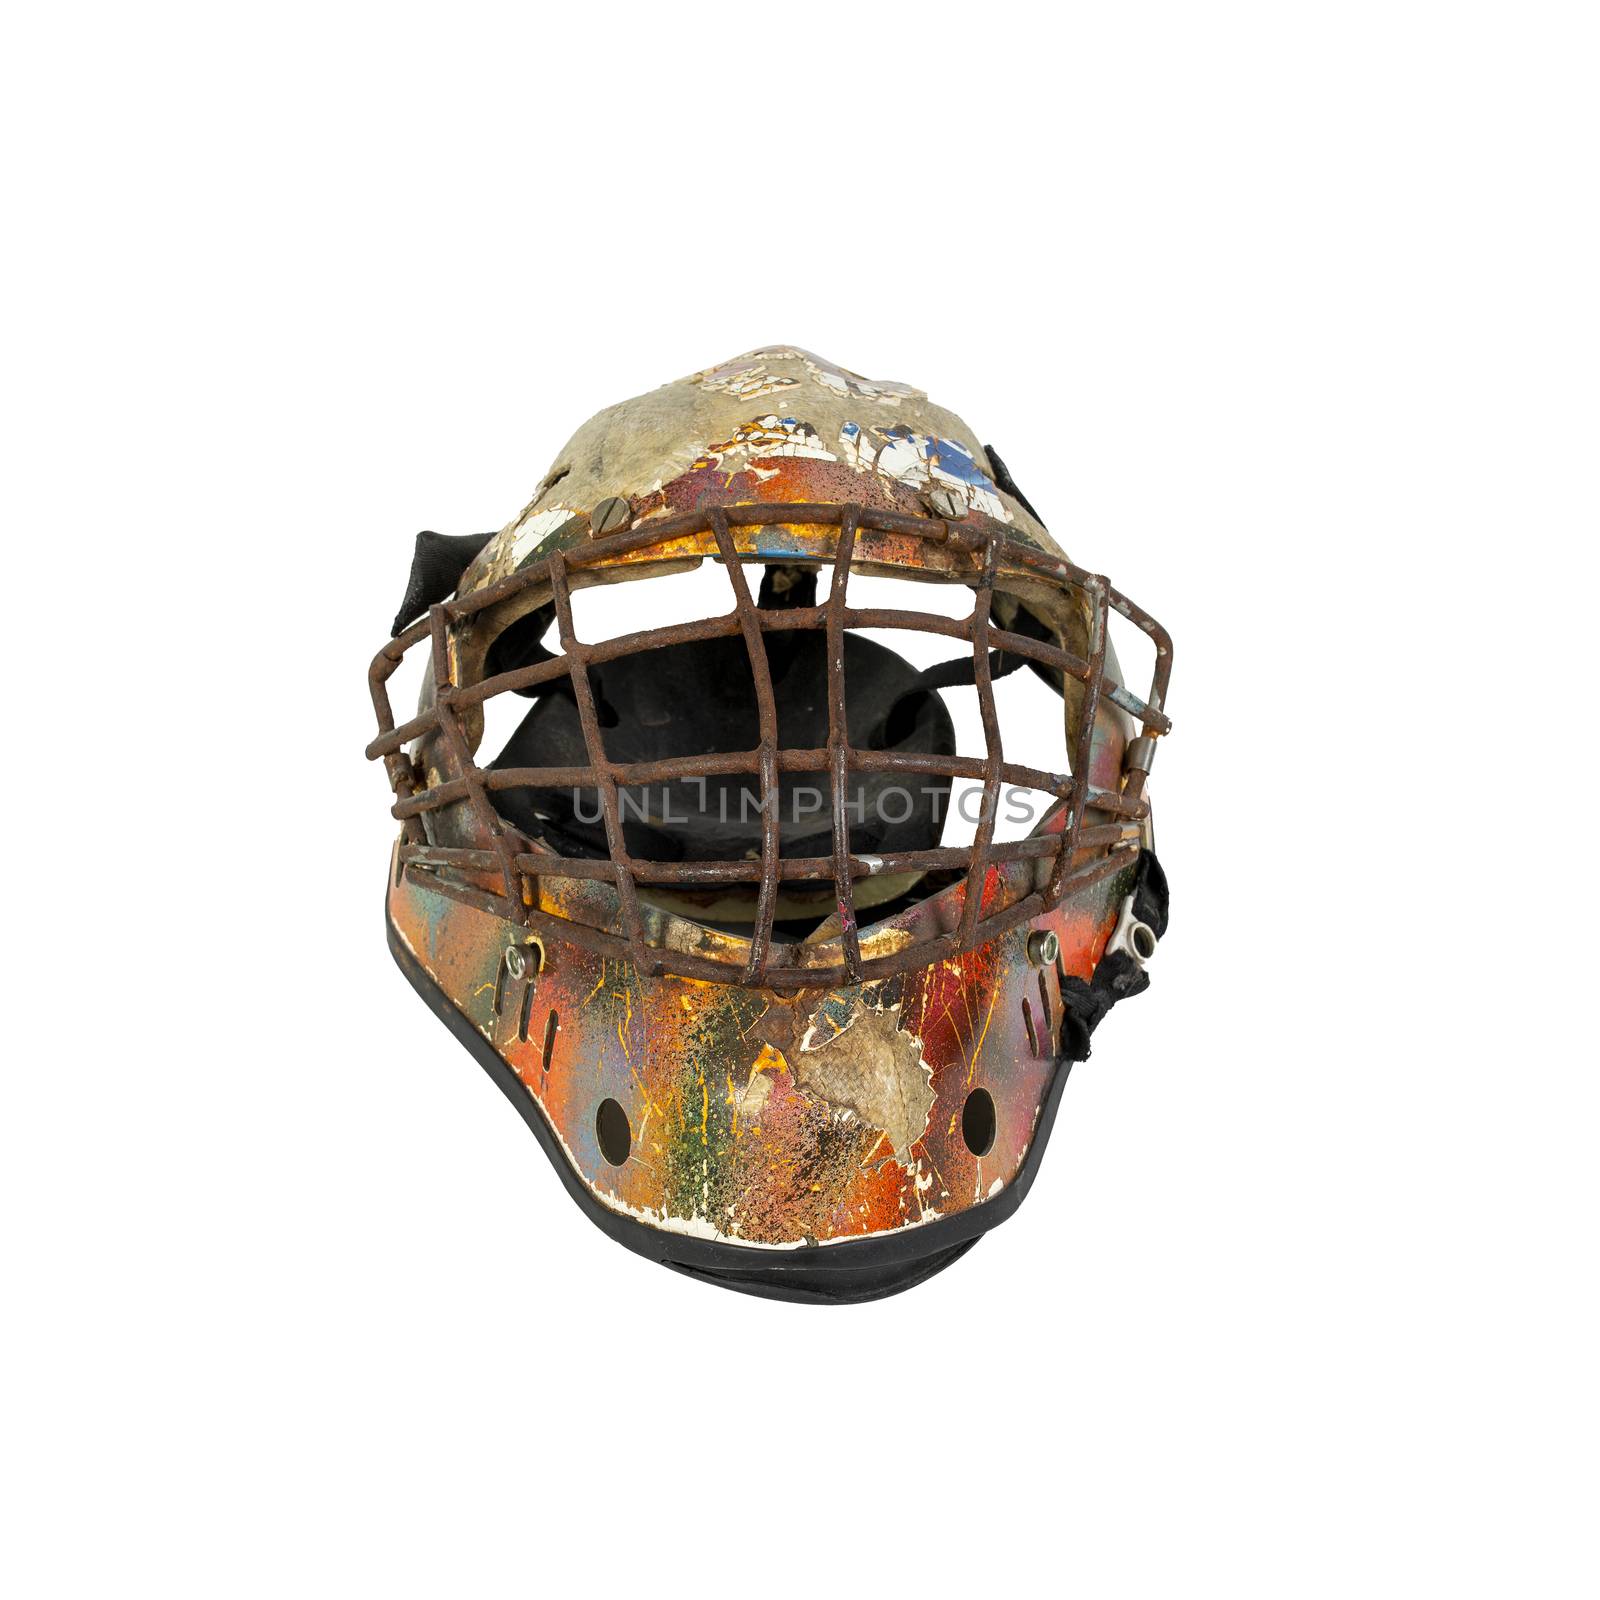 Old hockey mask for goalkeeper protection isolated on white background